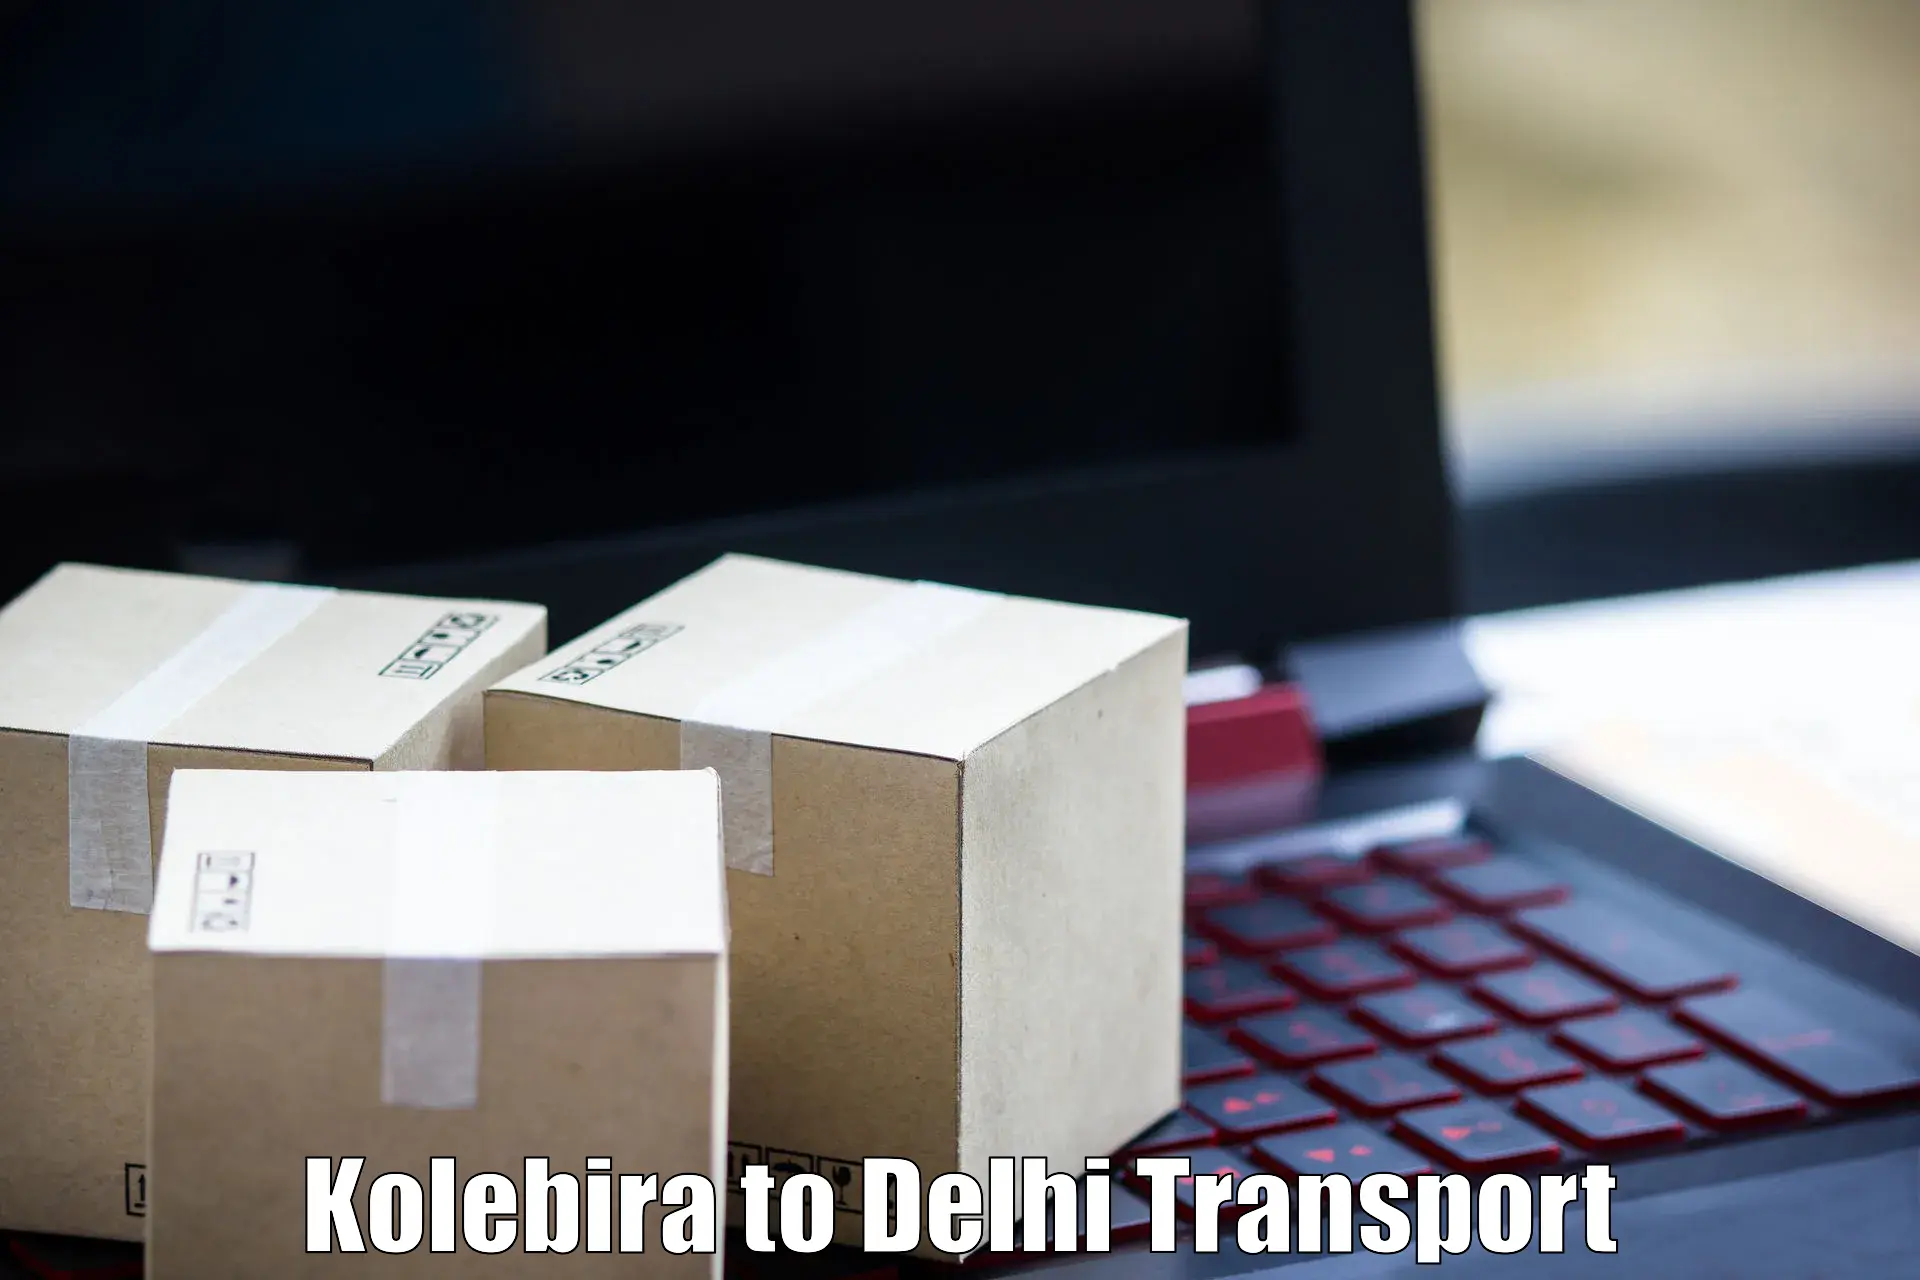 Pick up transport service Kolebira to East Delhi